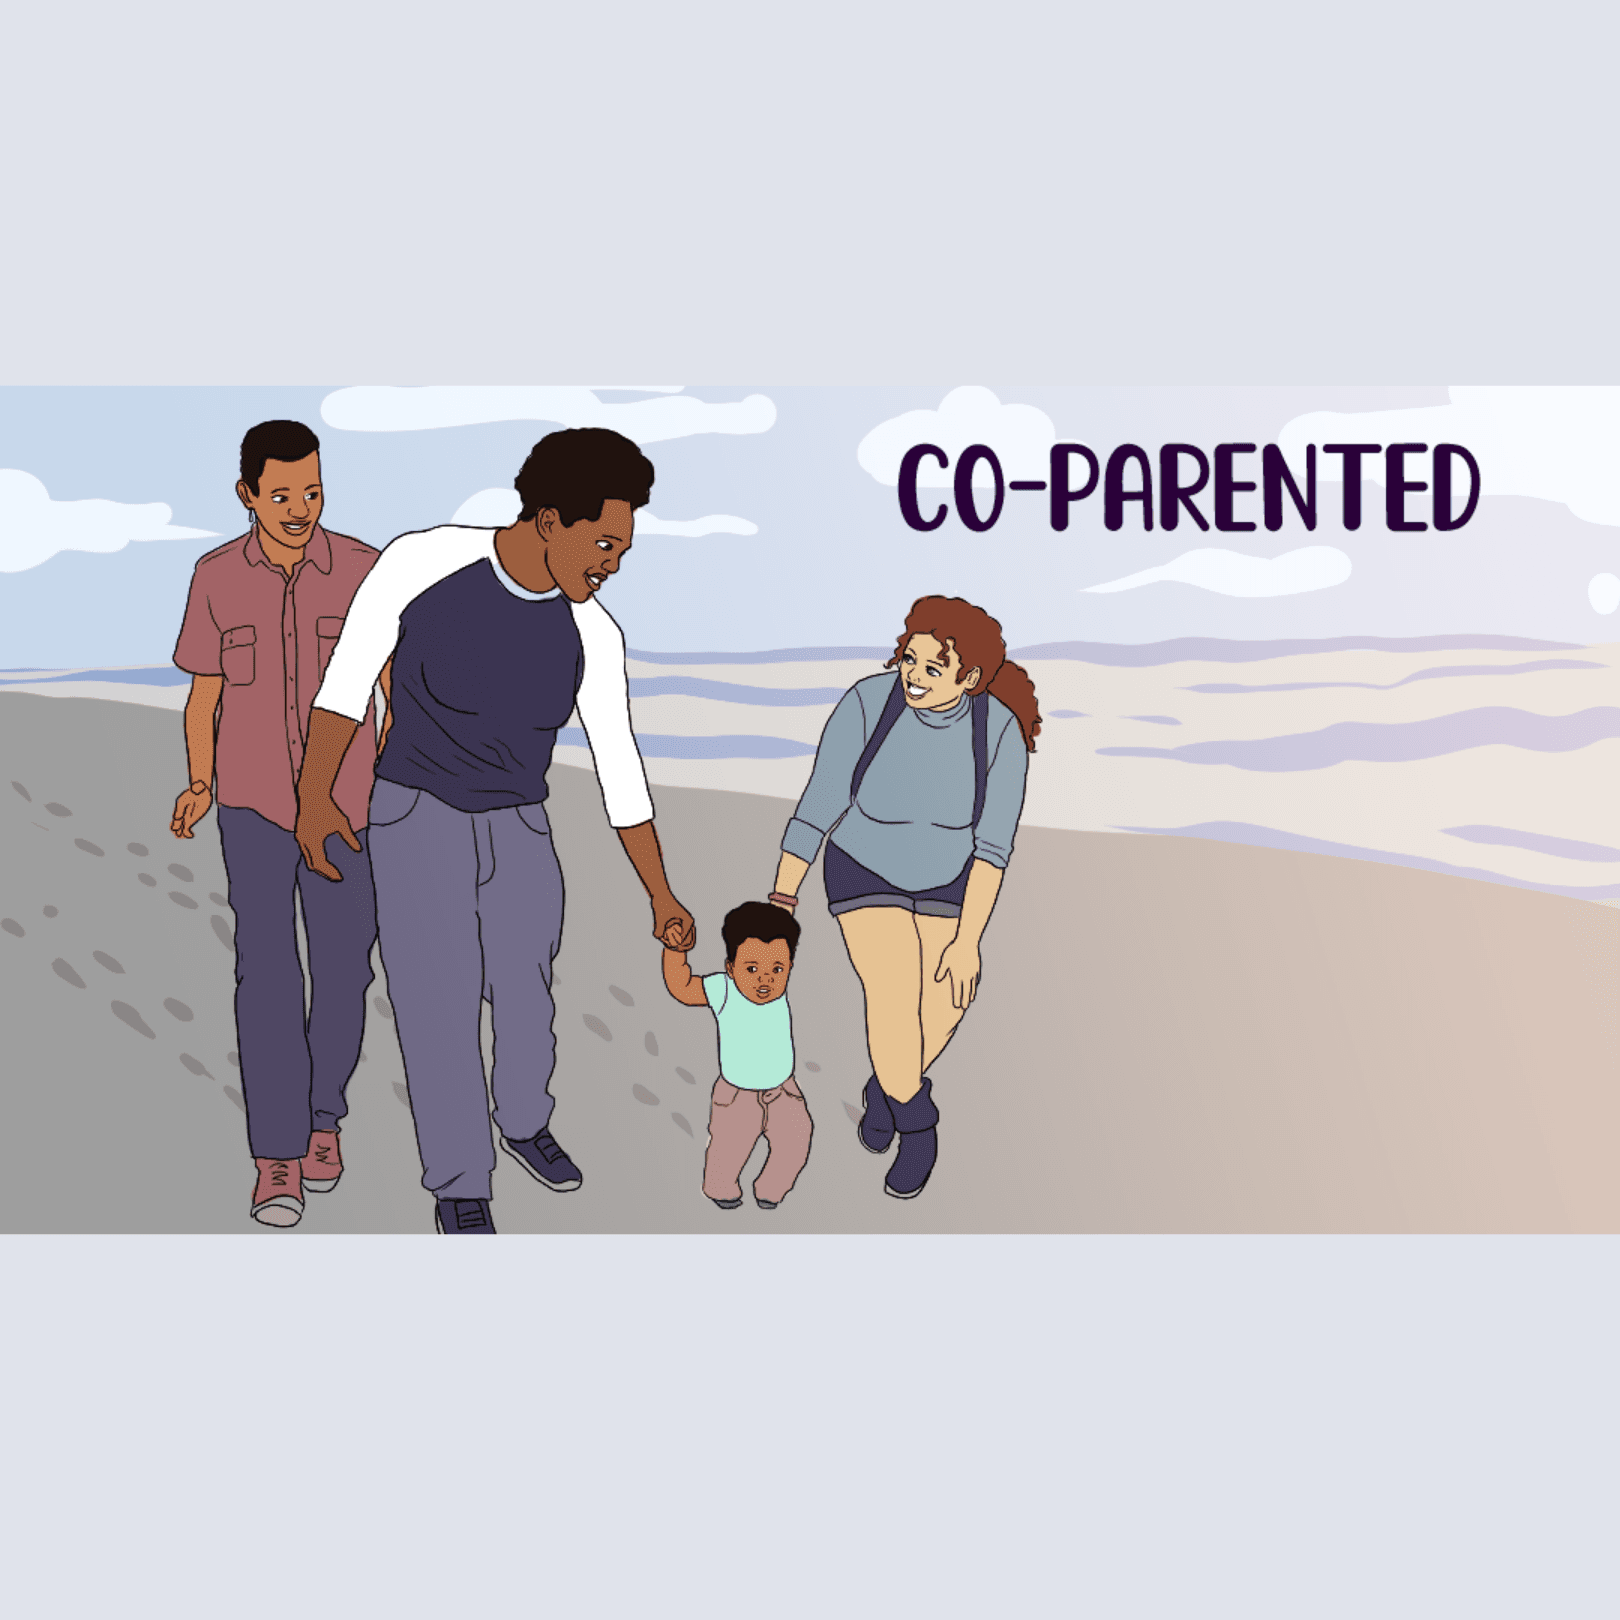 Thumbnail for "Co-Parented: Raising Children In Community".